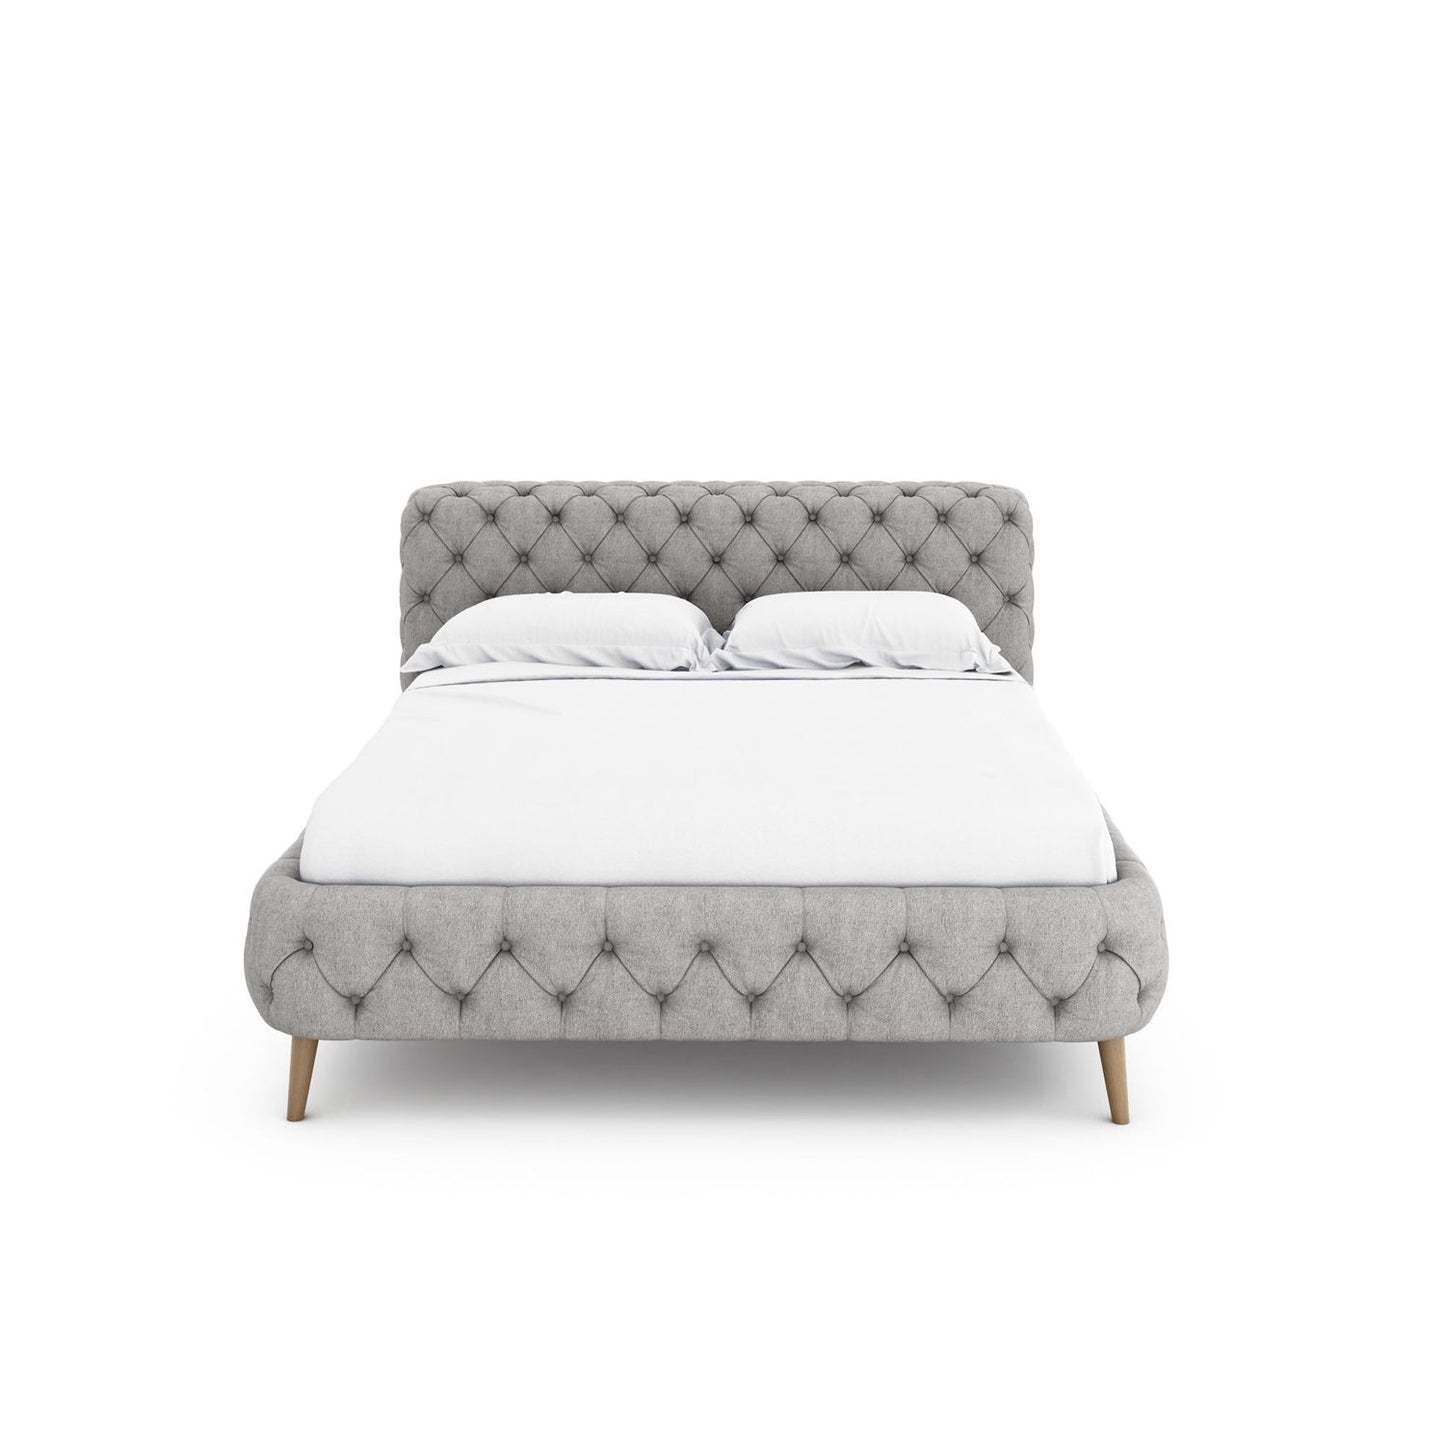 Monty Upholstered Bed - King Size